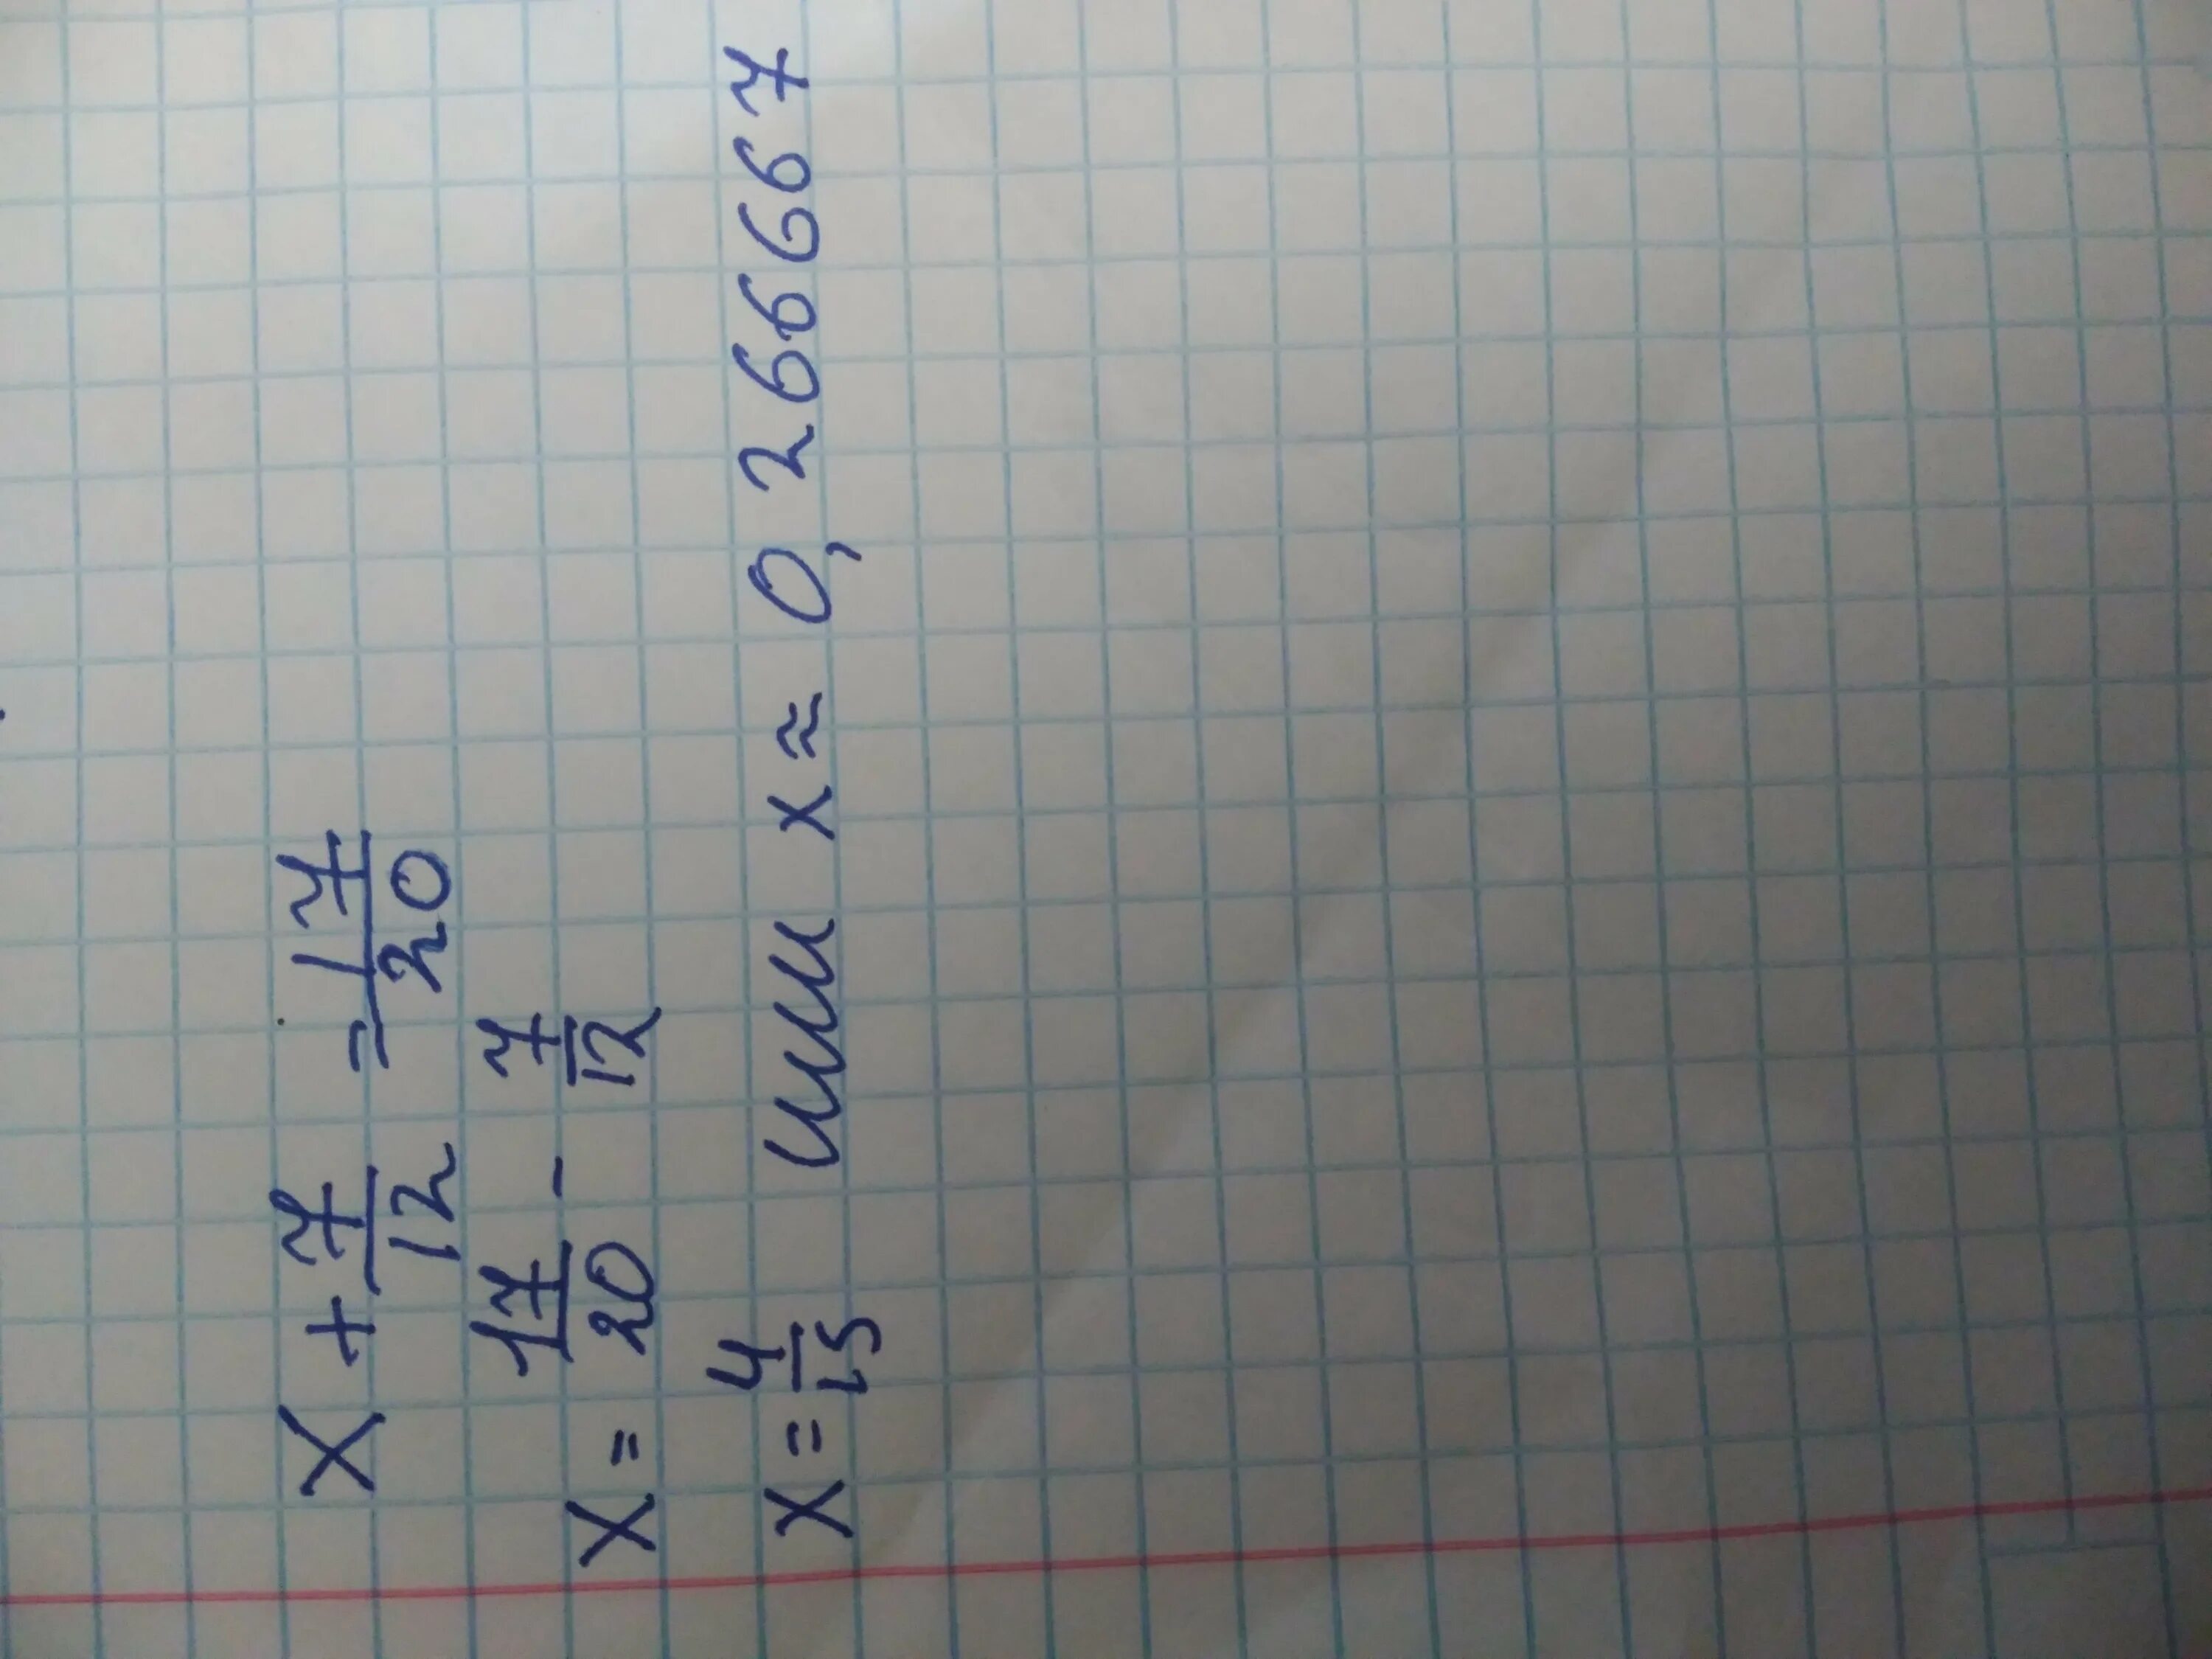 12 разделить на икс равно 3. Икс плюс Икс. Уравнение Икс разделить на 8 равно 12. Икс равно. Икс плюс 7 равно 10.